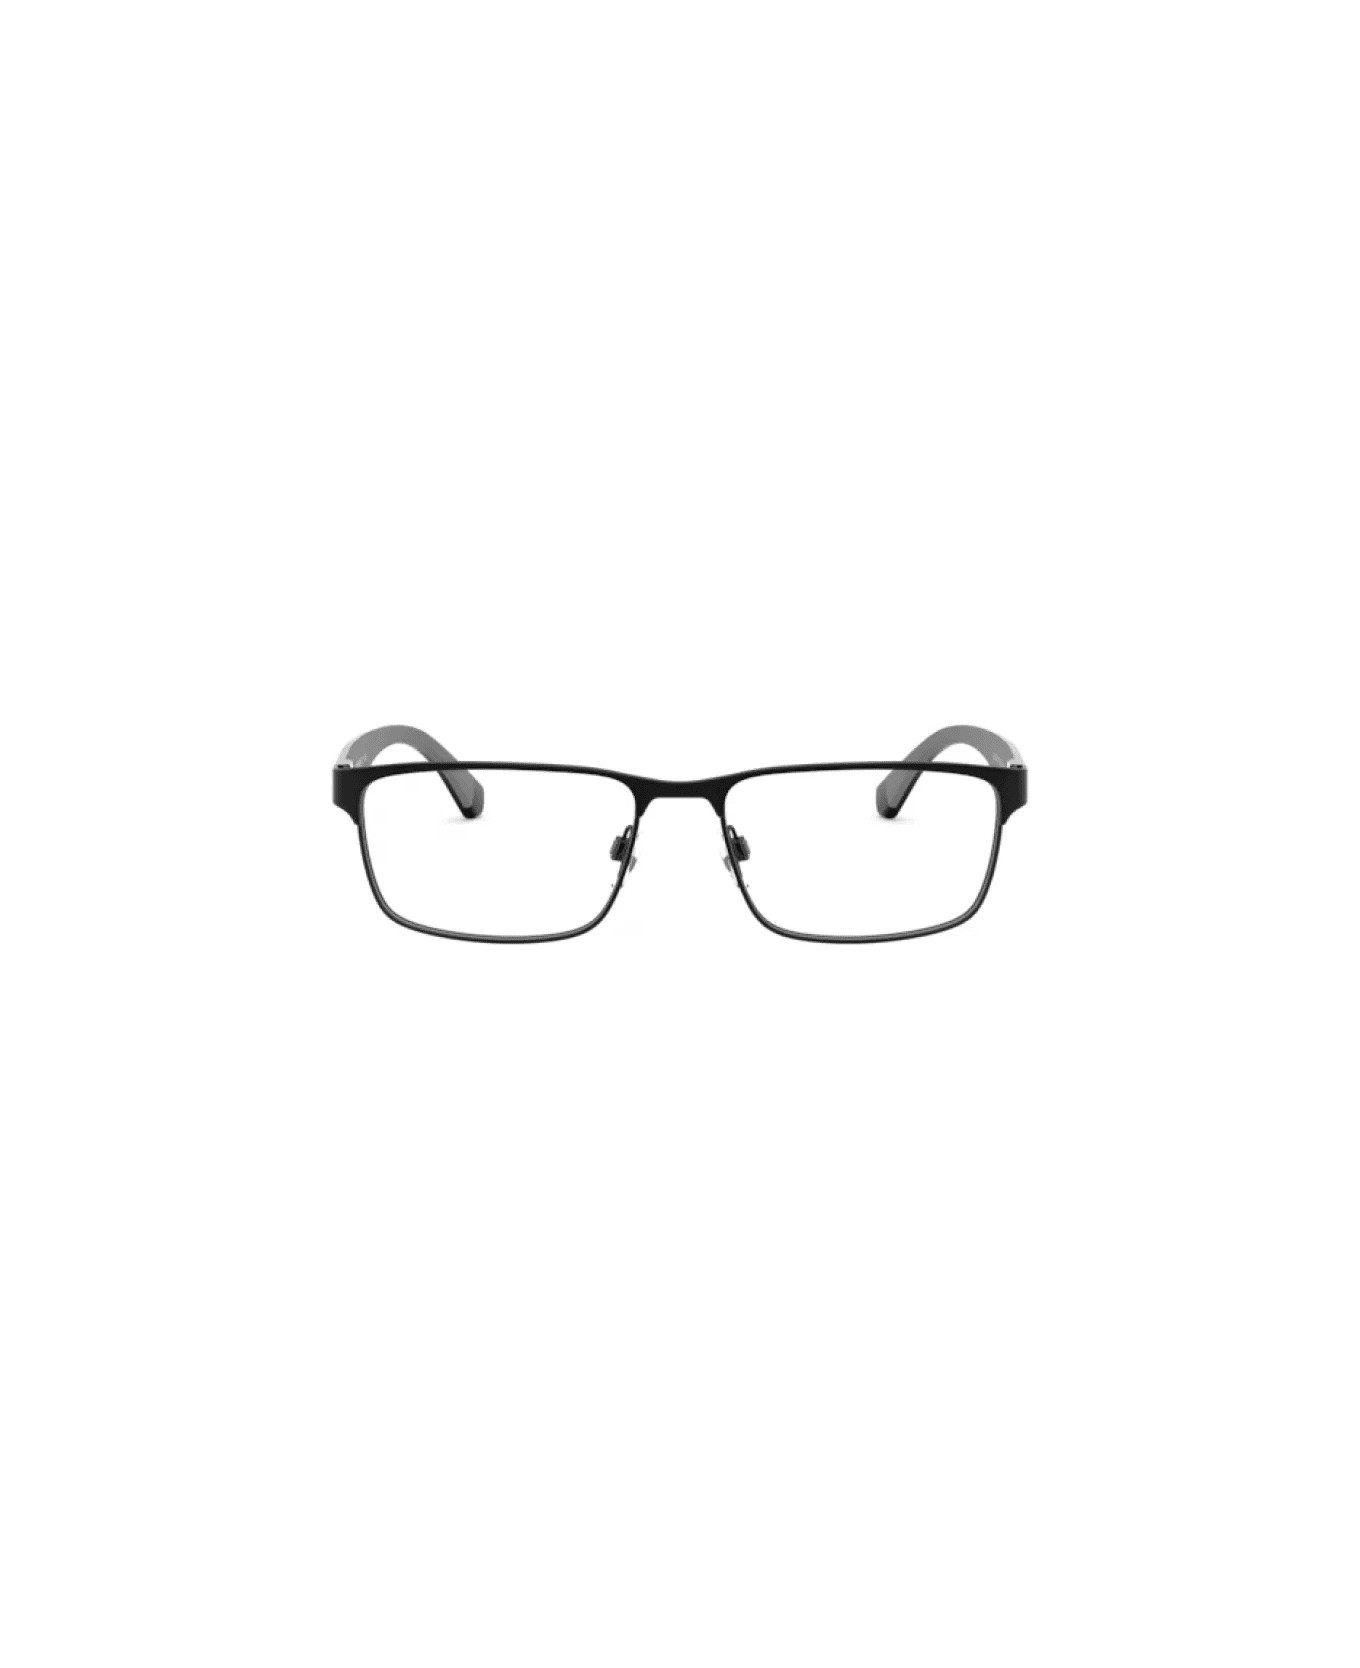 Emporio Armani EA1105 3014 Glasses アイウェア